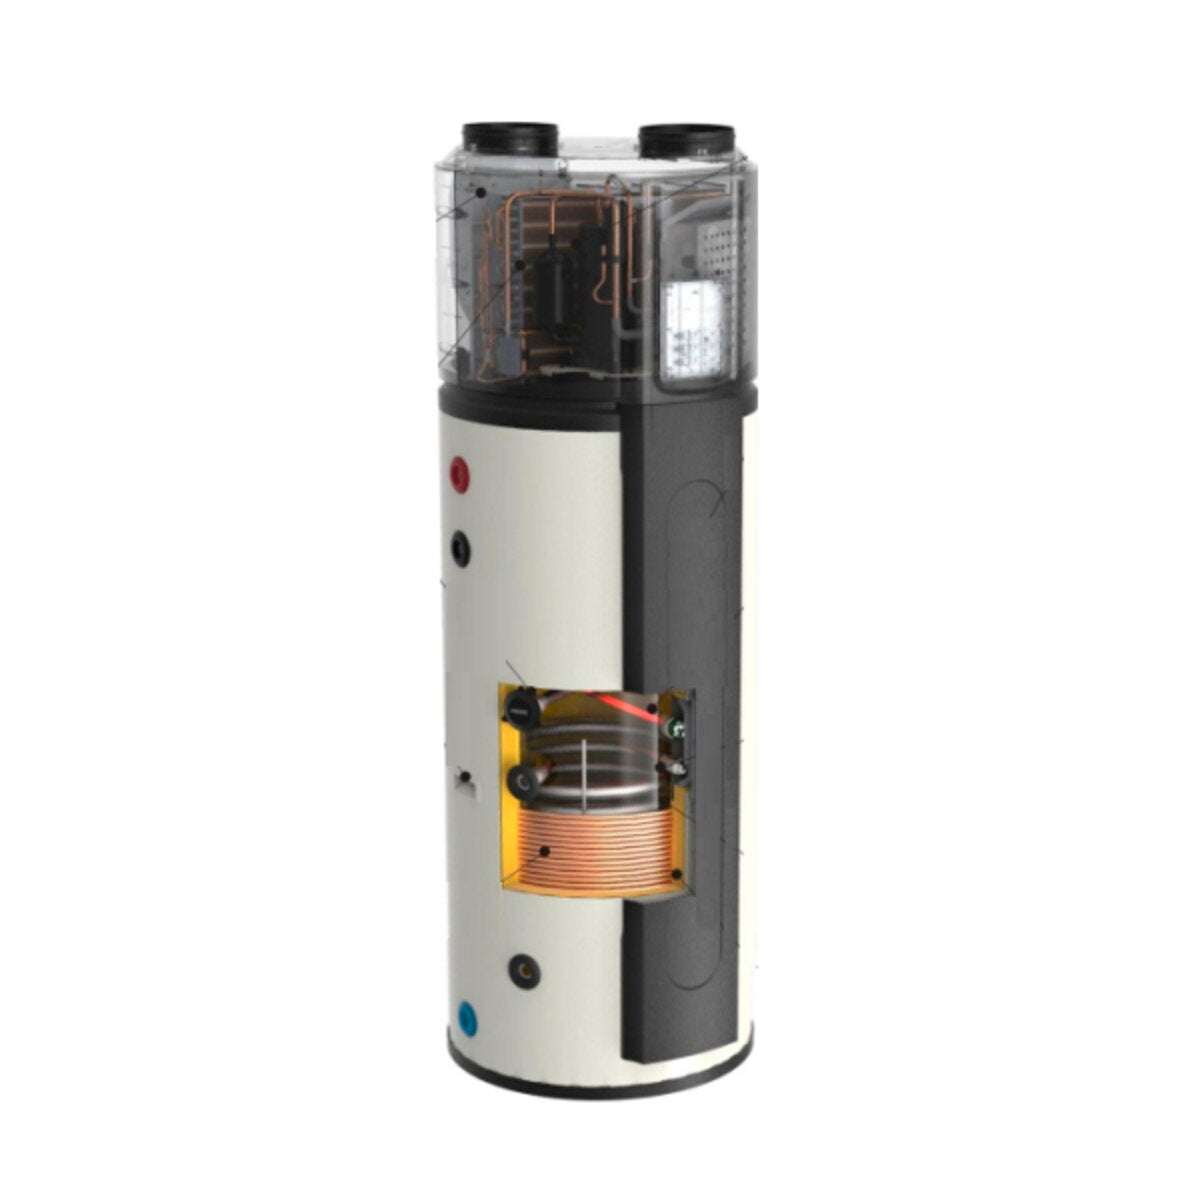 Clivet AQUA Plus SWAN-2 190S heat pump water heater with coil